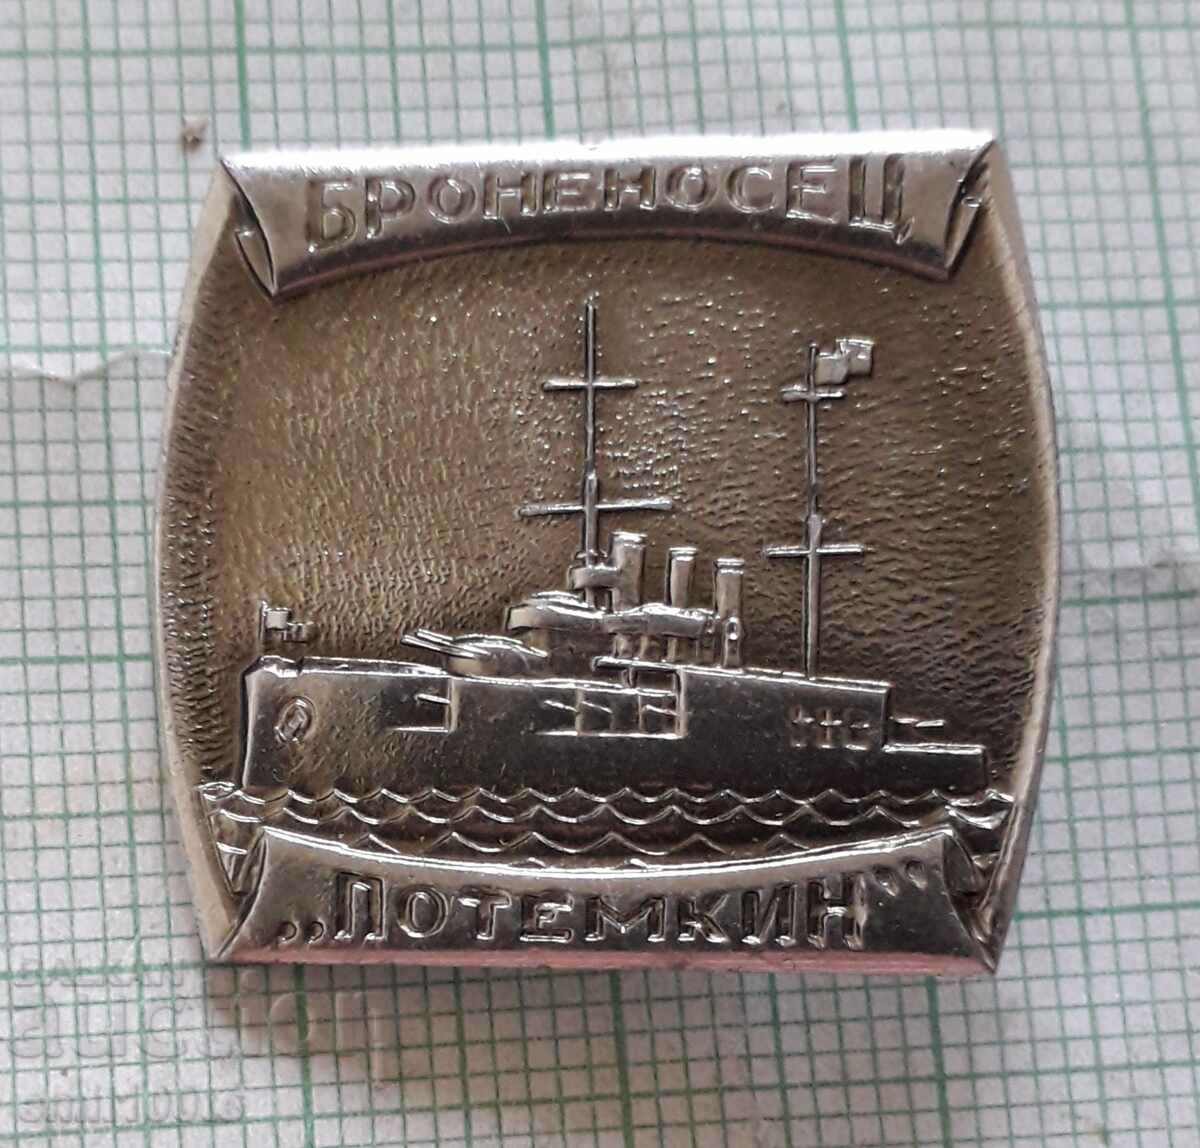 Badge - Battleship Potemkin